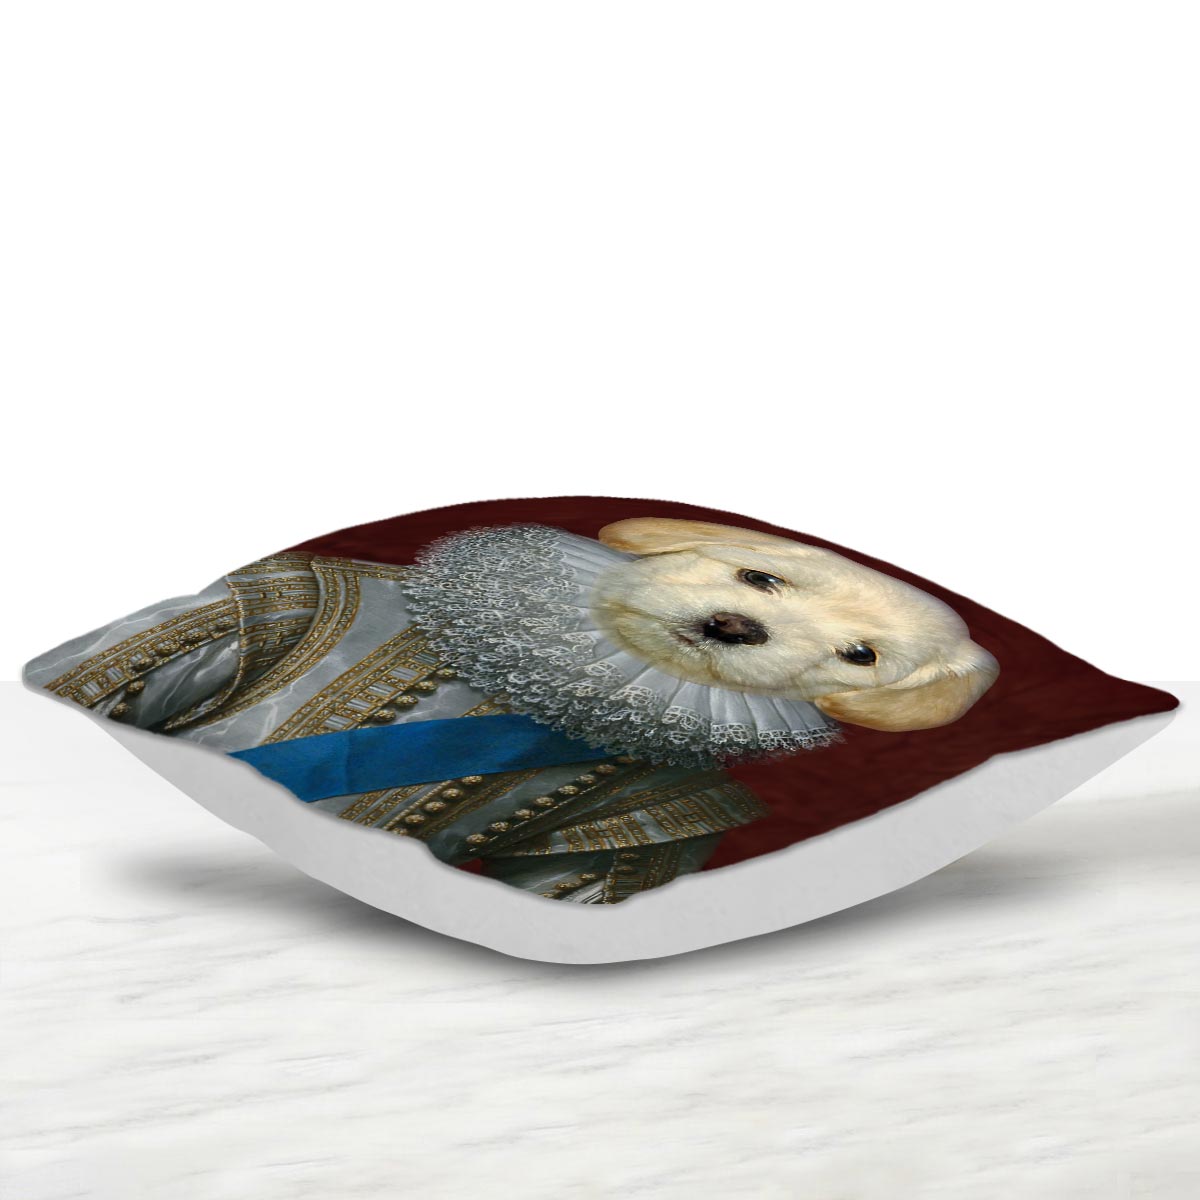 Renaissance Nobleman Personalised Pet Cushion